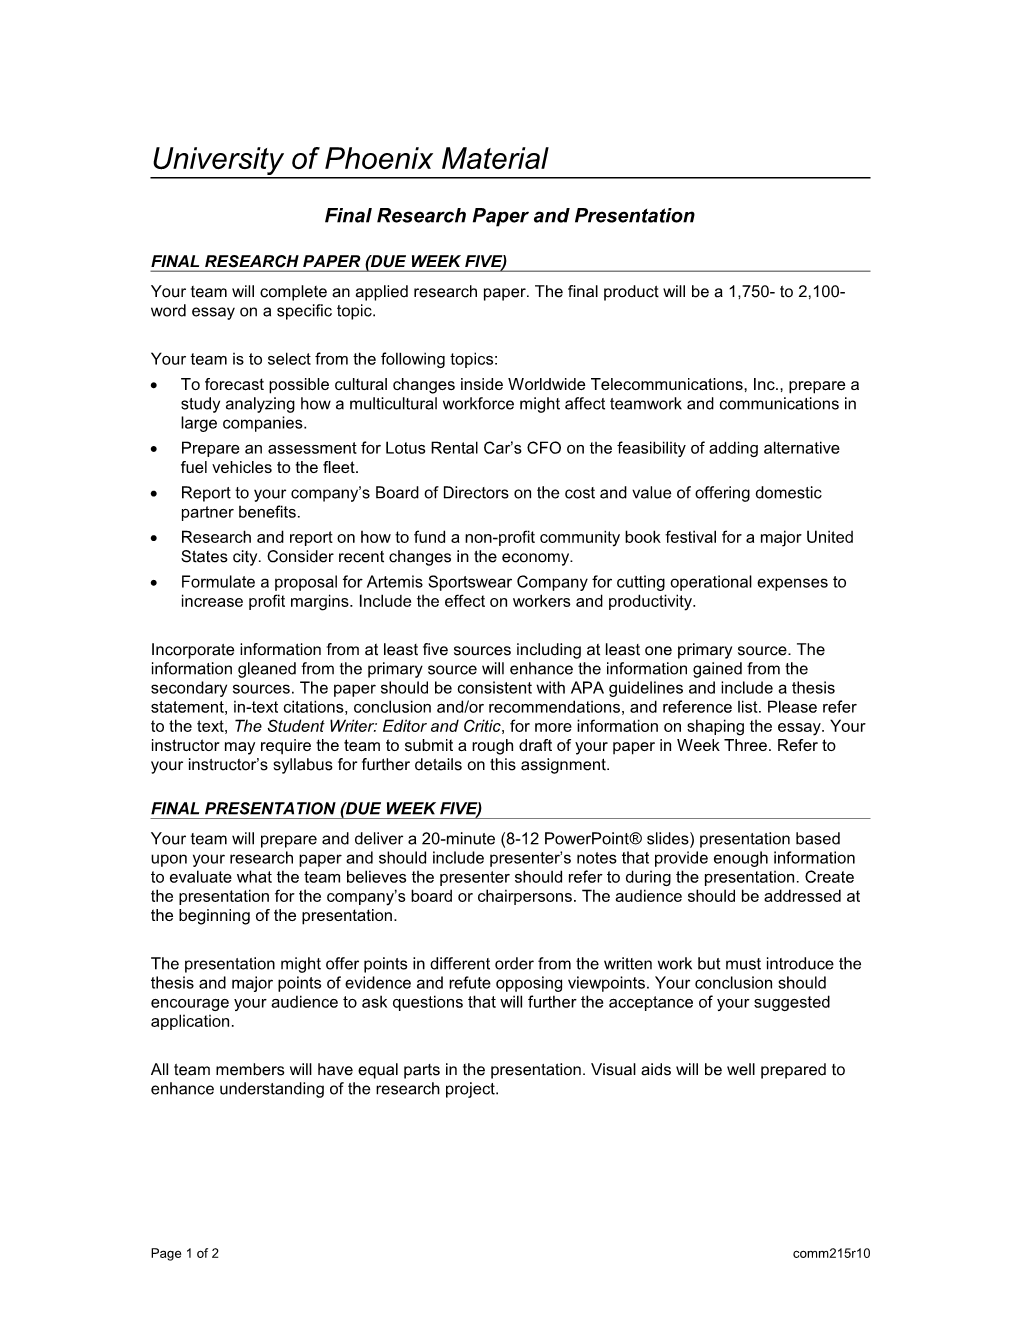 University of Phoenix Material s3